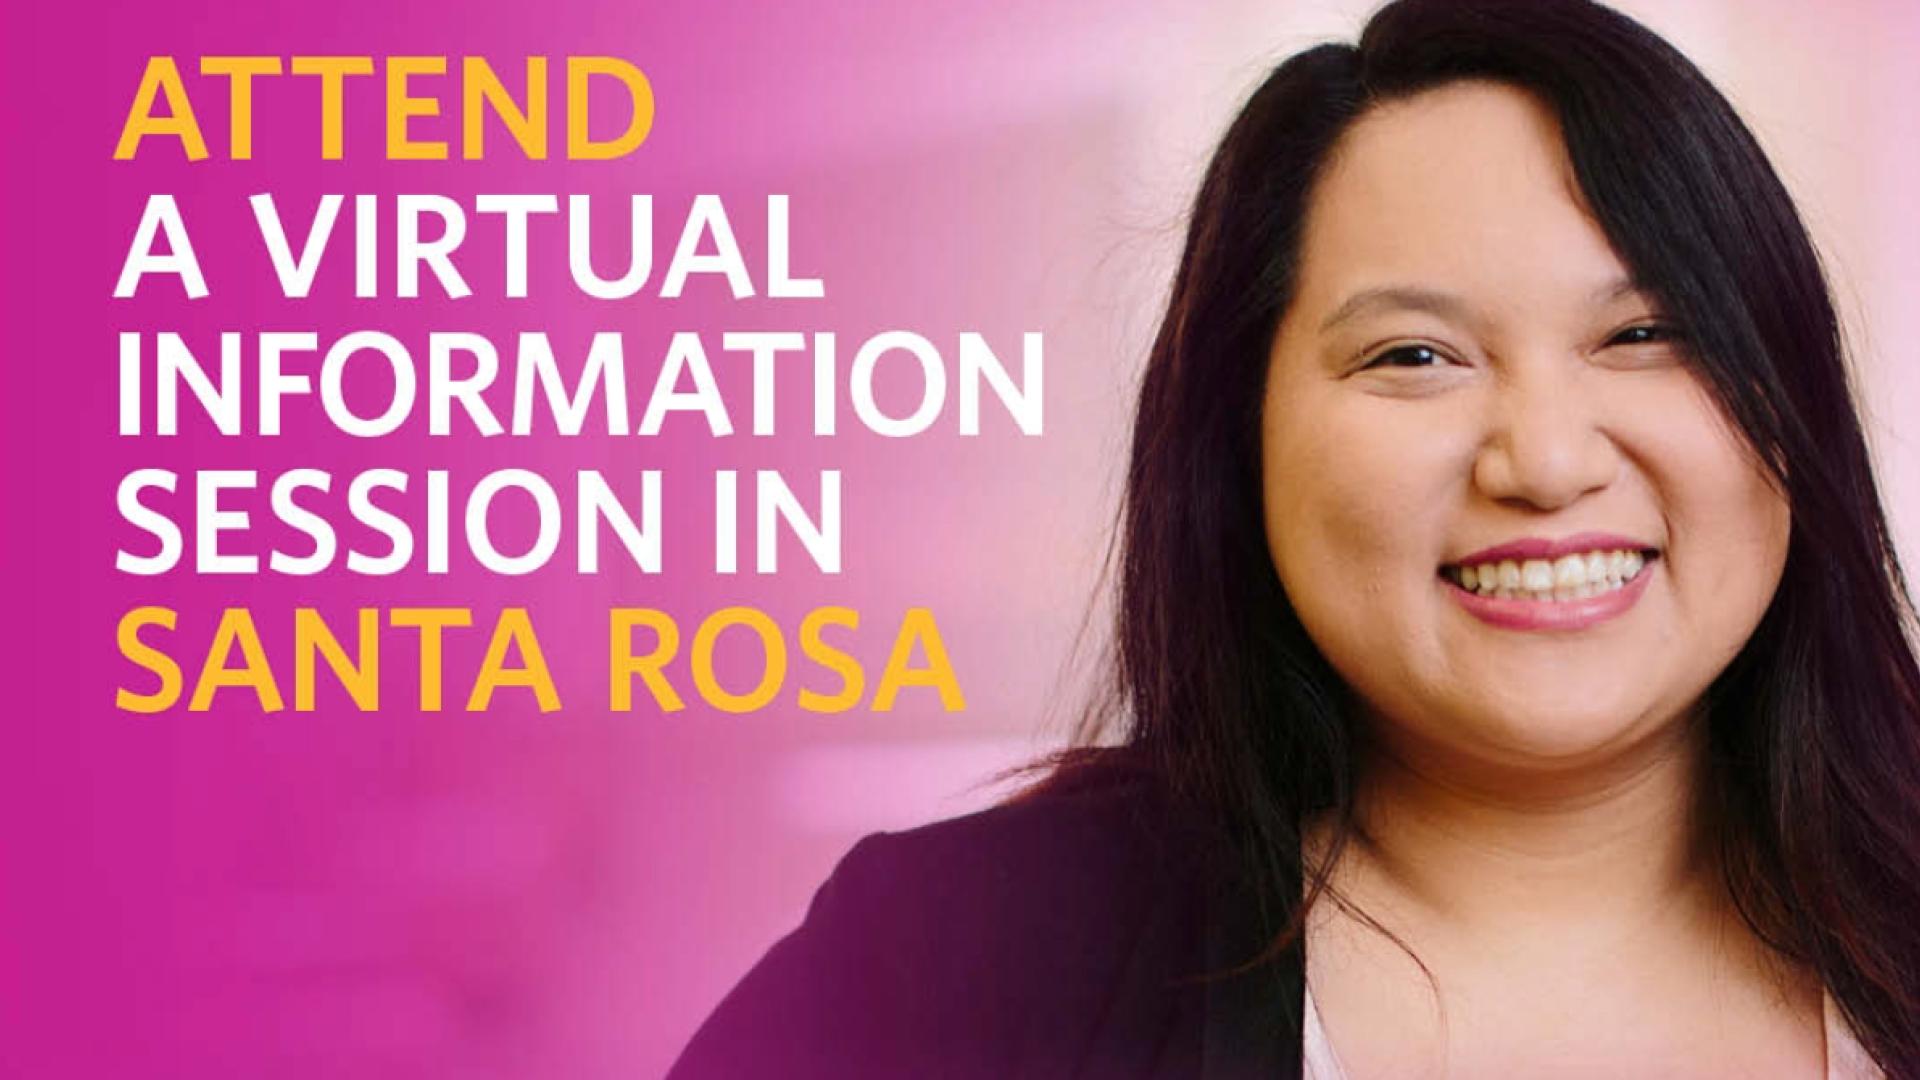 Marriage & Family Therapy Virtual Information Meeting - Santa Rosa